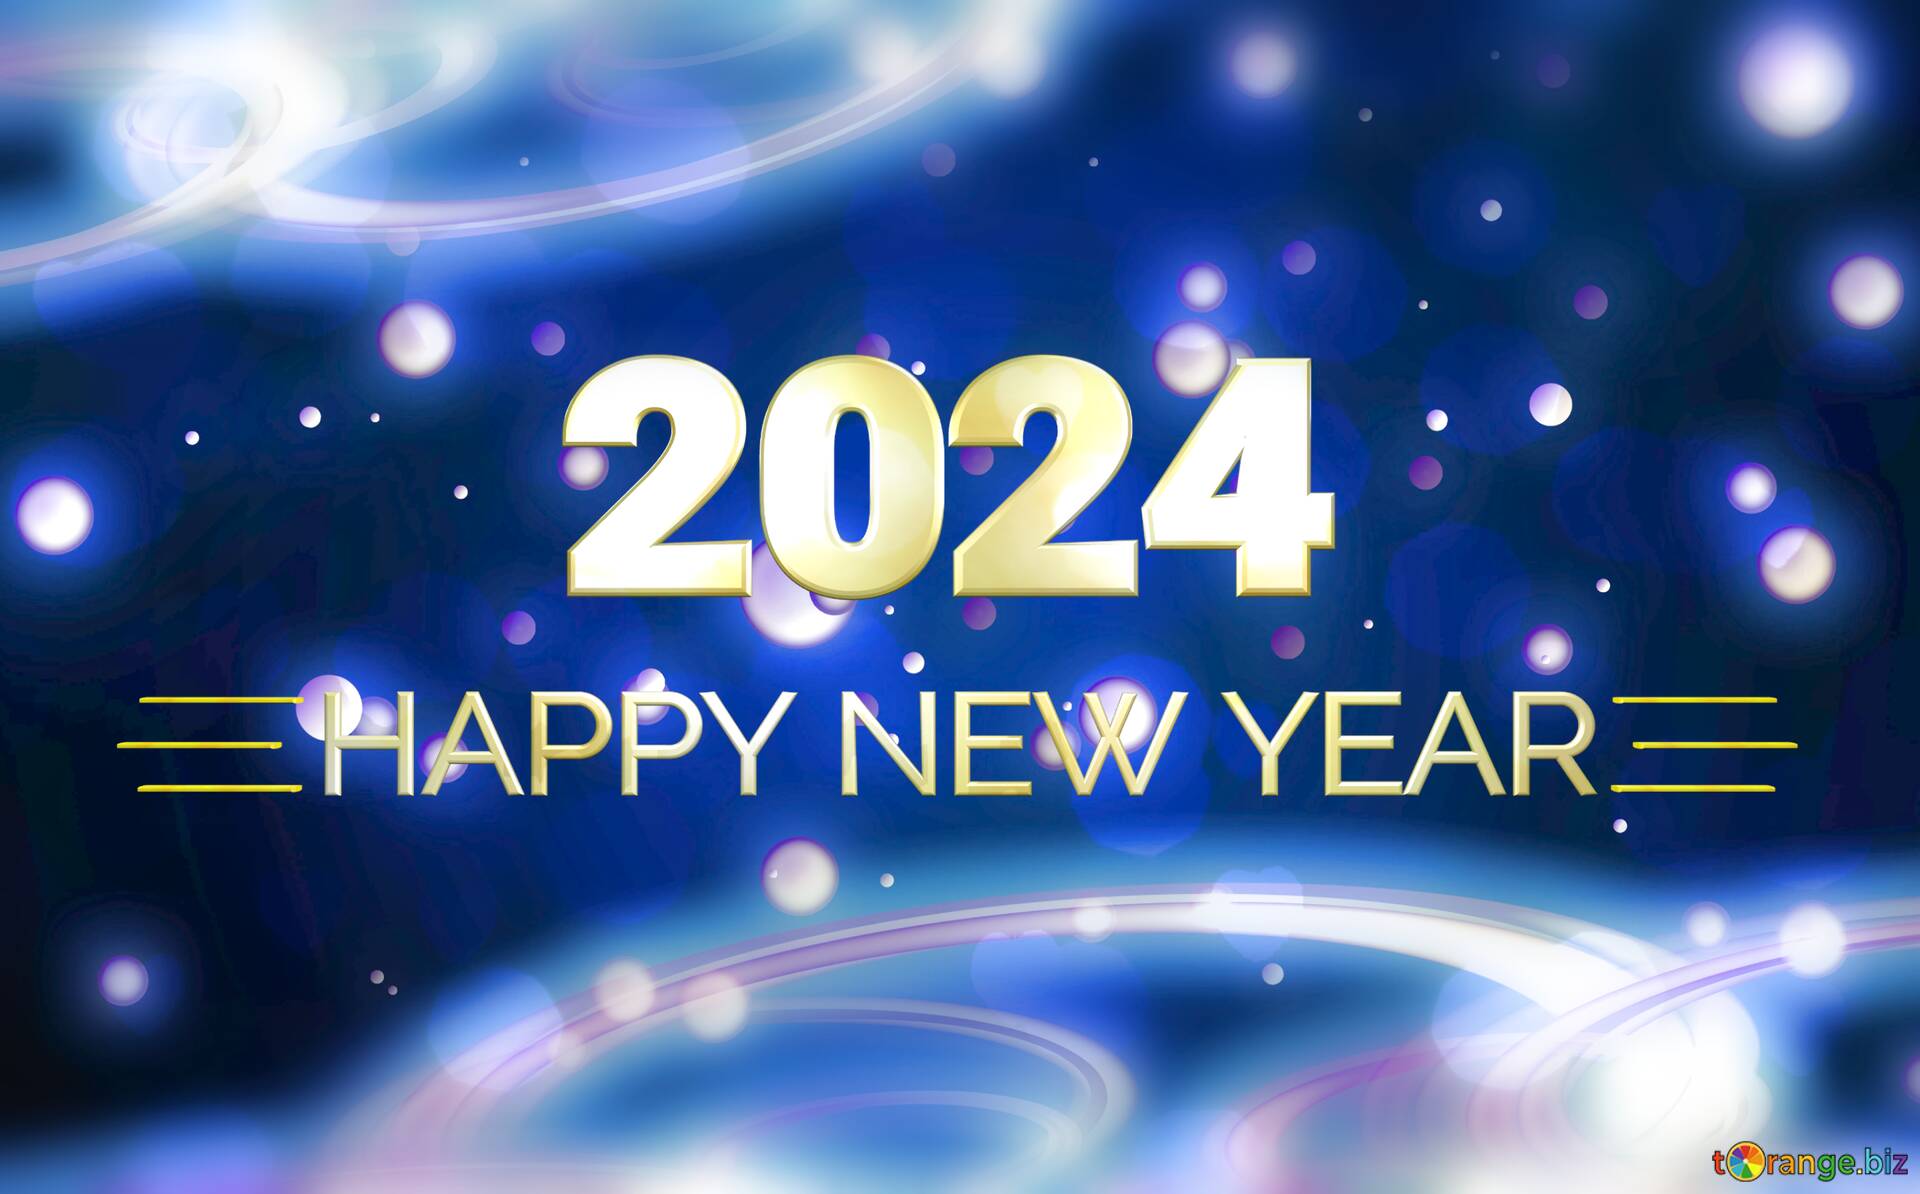 Happy new year 2024 Best image. №229425